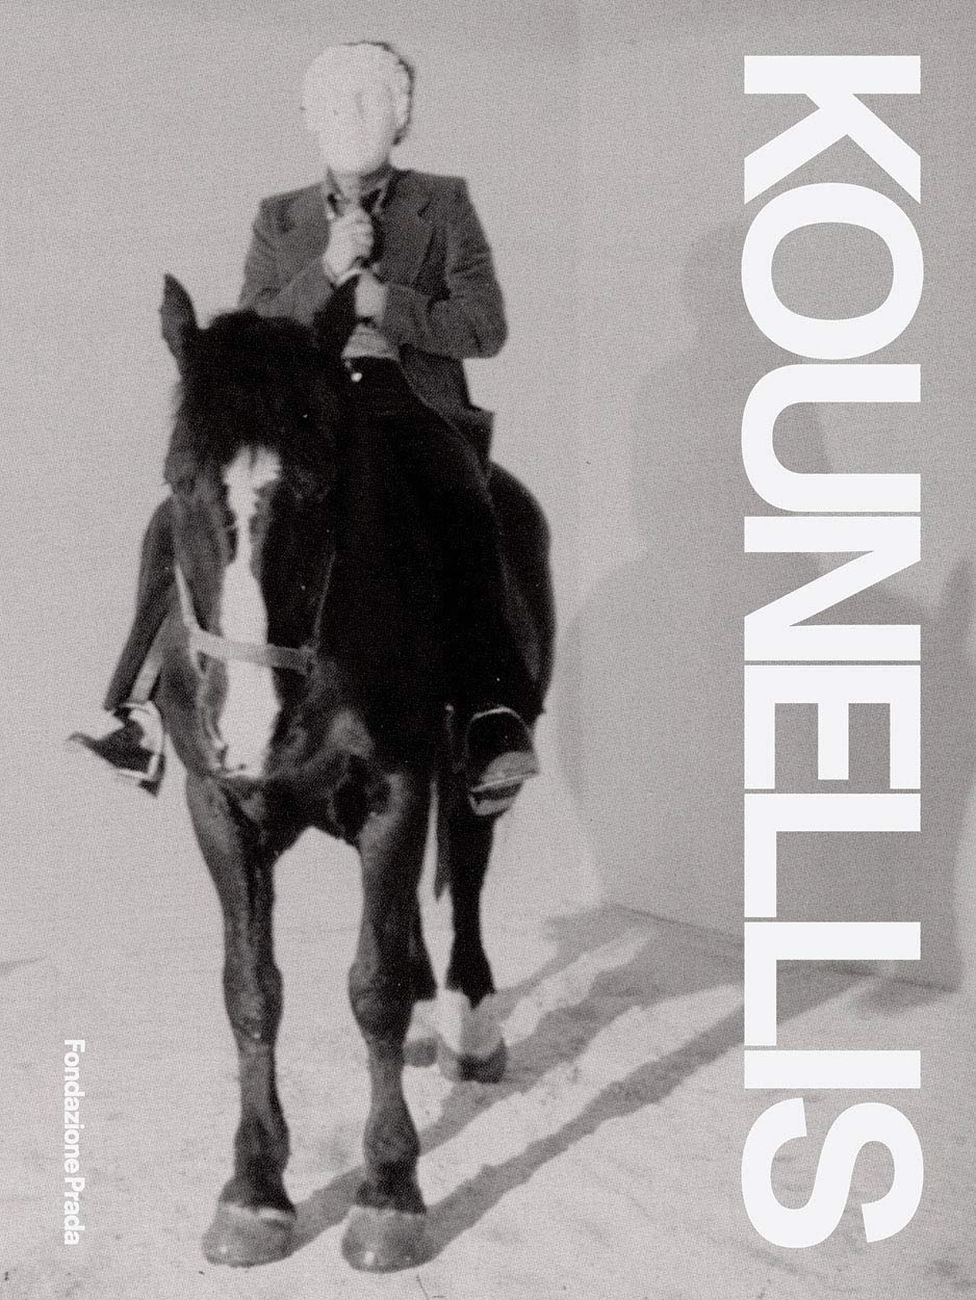 Germano Celant (ed.) – Jannis Kounellis (Fondazione Prada, Milano 2019)